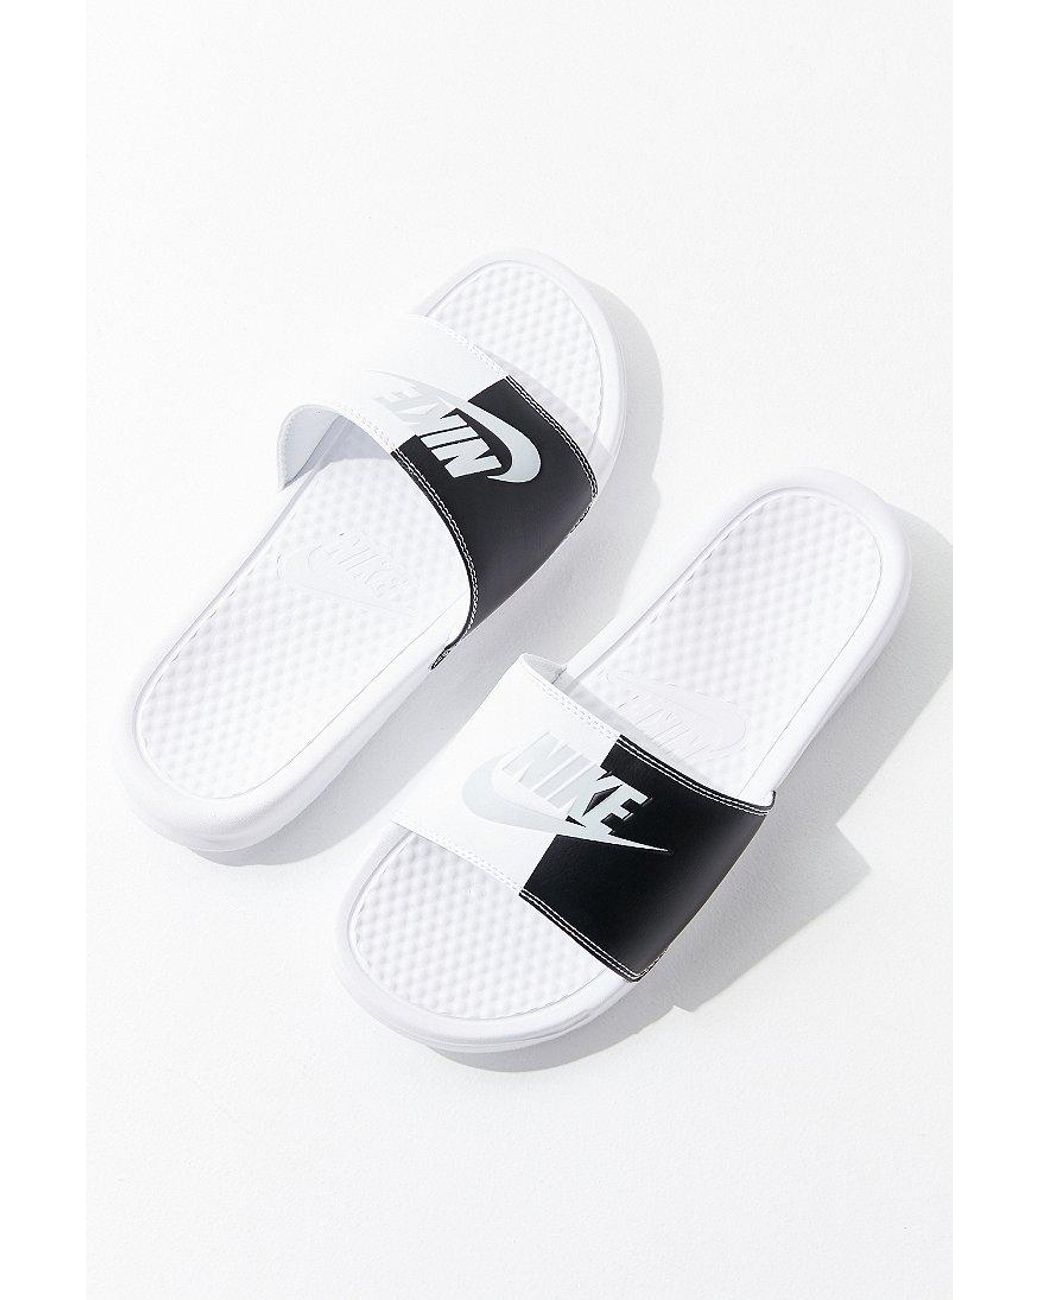 Nike Rubber Nike Benassi Jdi Colorblock Slide in Black + White (White) |  Lyst